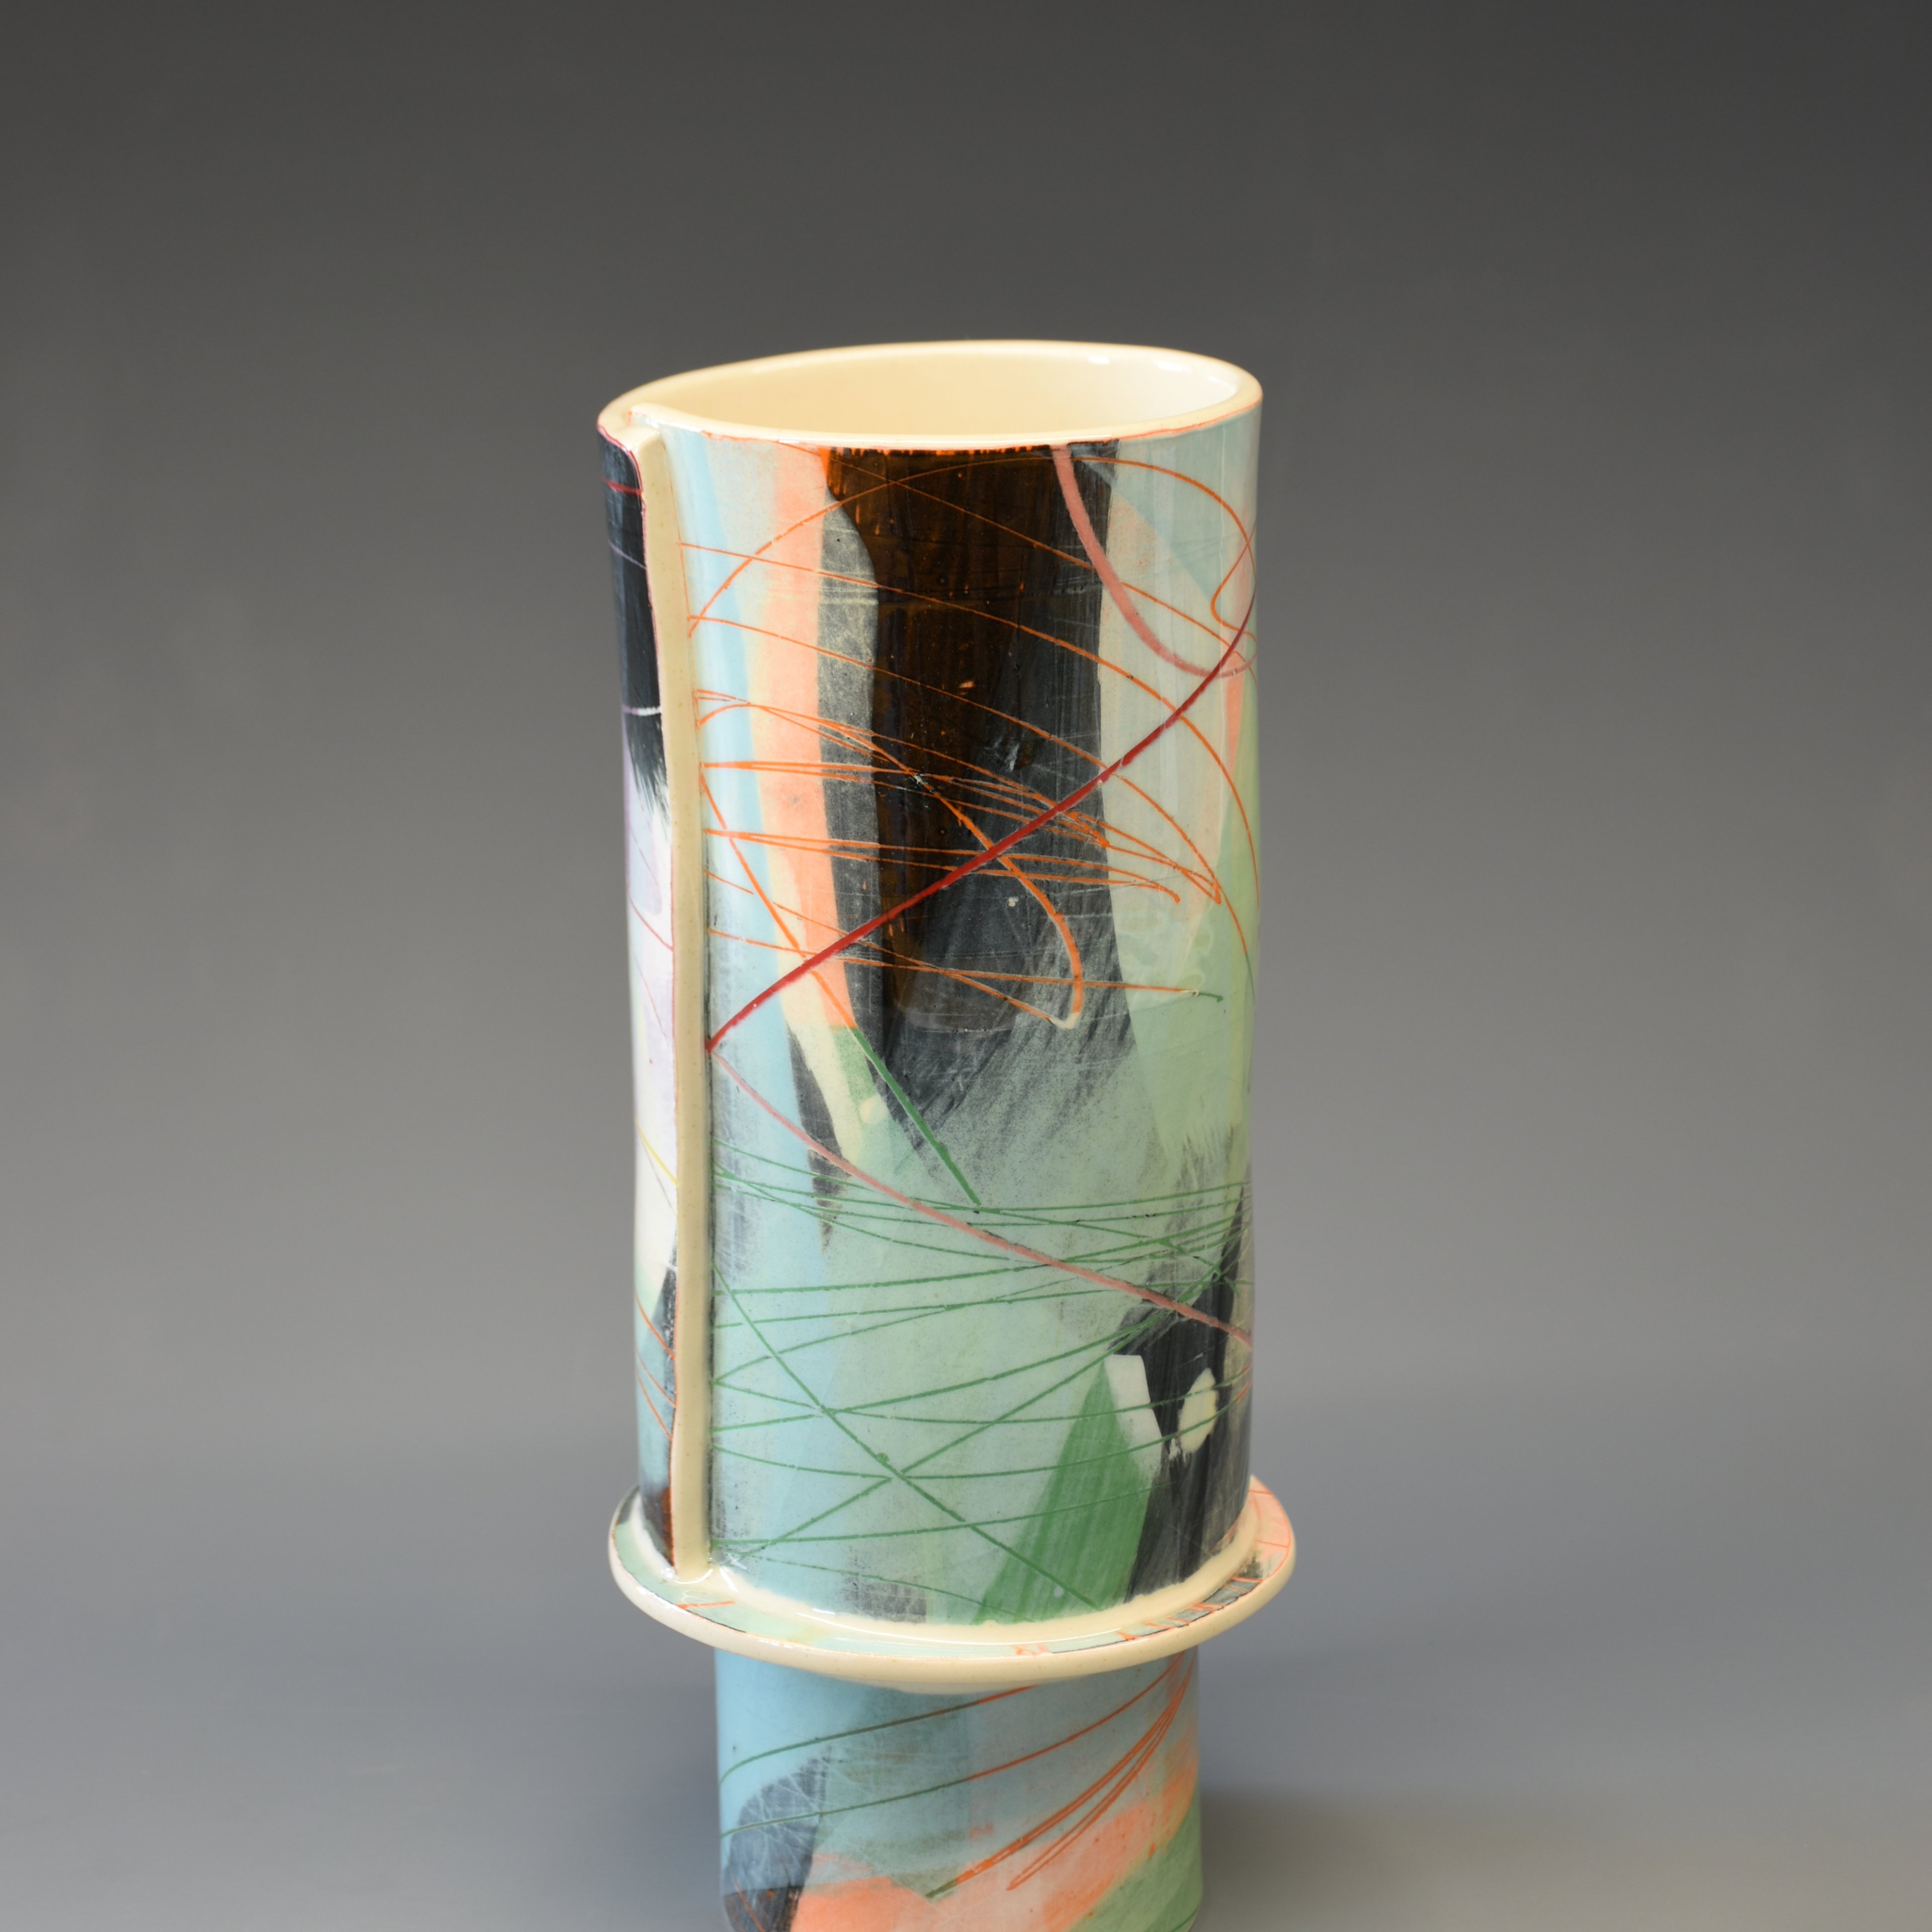 Elke Sada, Cylindrical Vase No. 1, #2